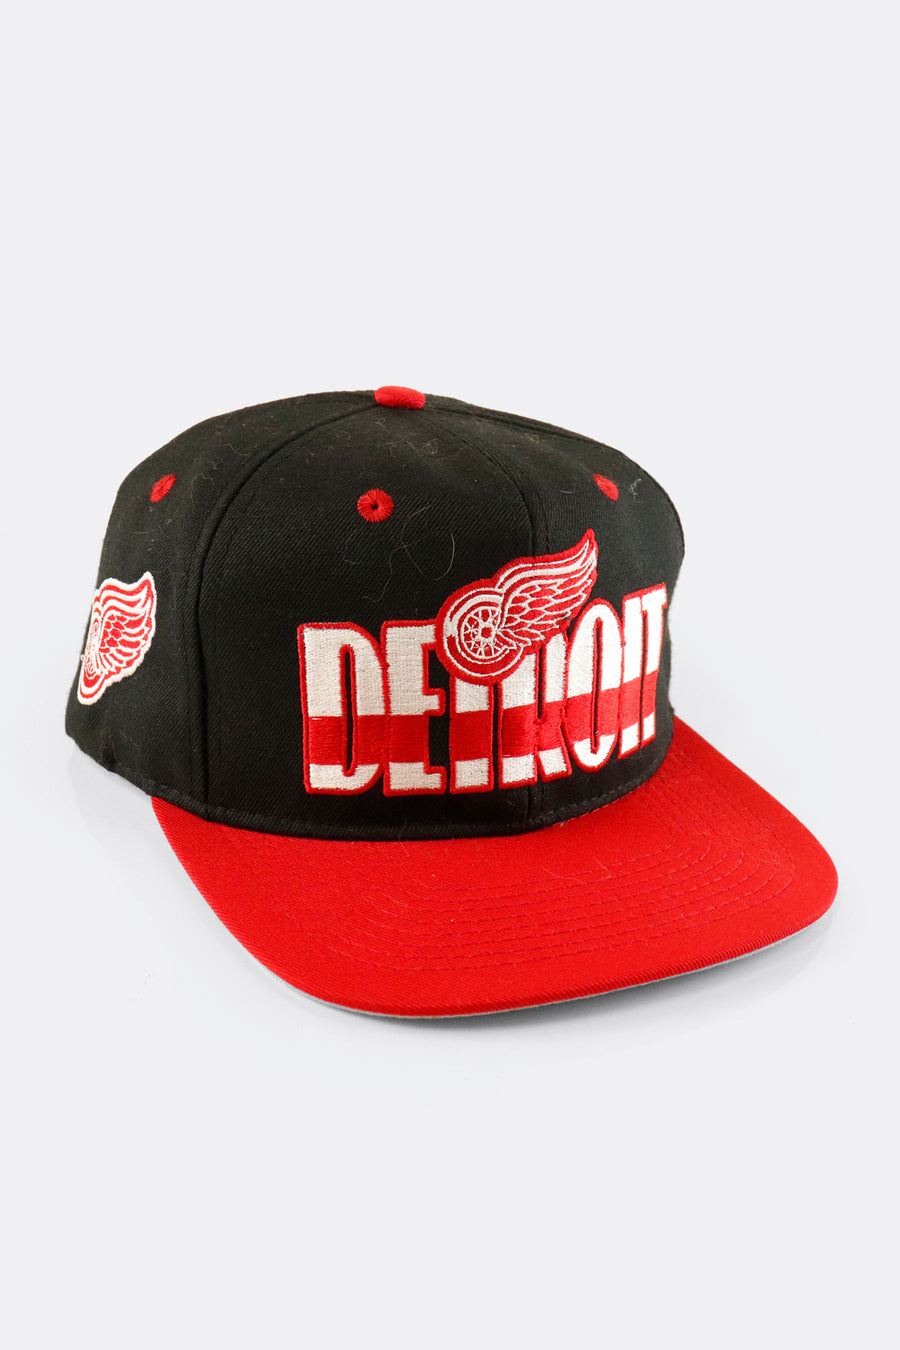 Vintage NHL Detroit Red Wings Embroidered Snapback Hat